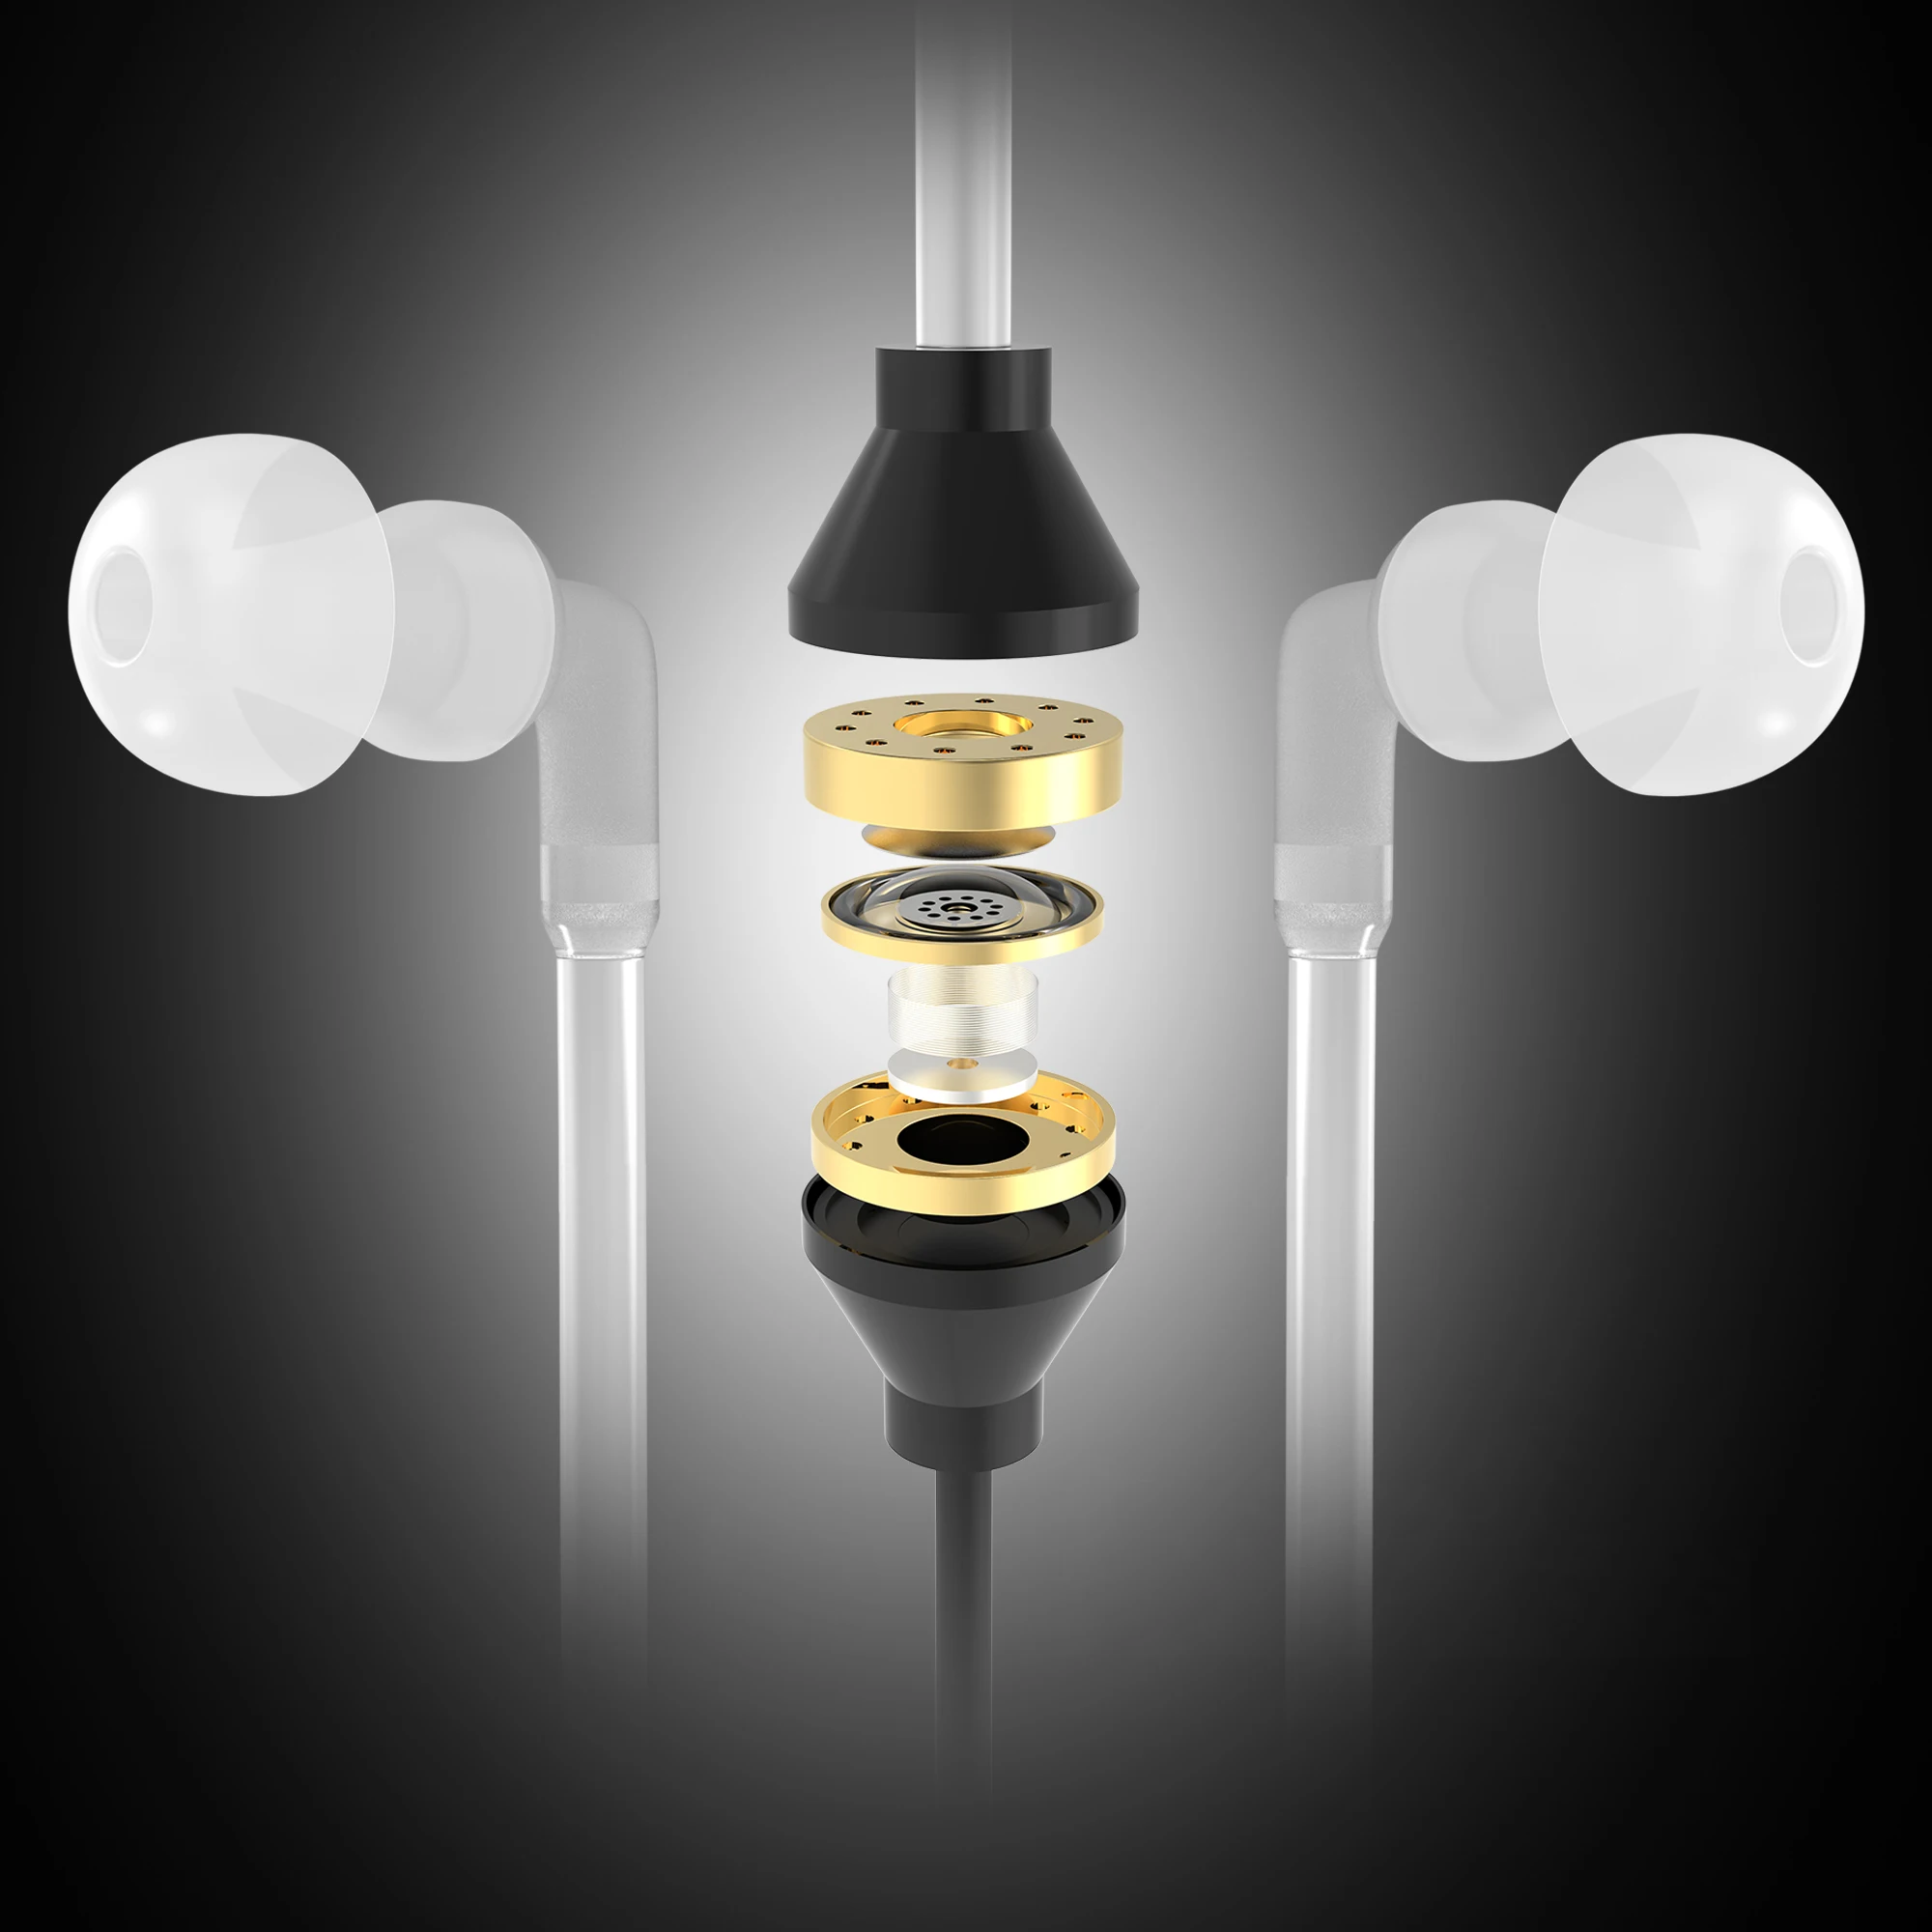 

fs01 wired earphone 3.5MM Stereo Air Tube smart headphones Radiation-proof Spiral earphone & headphone